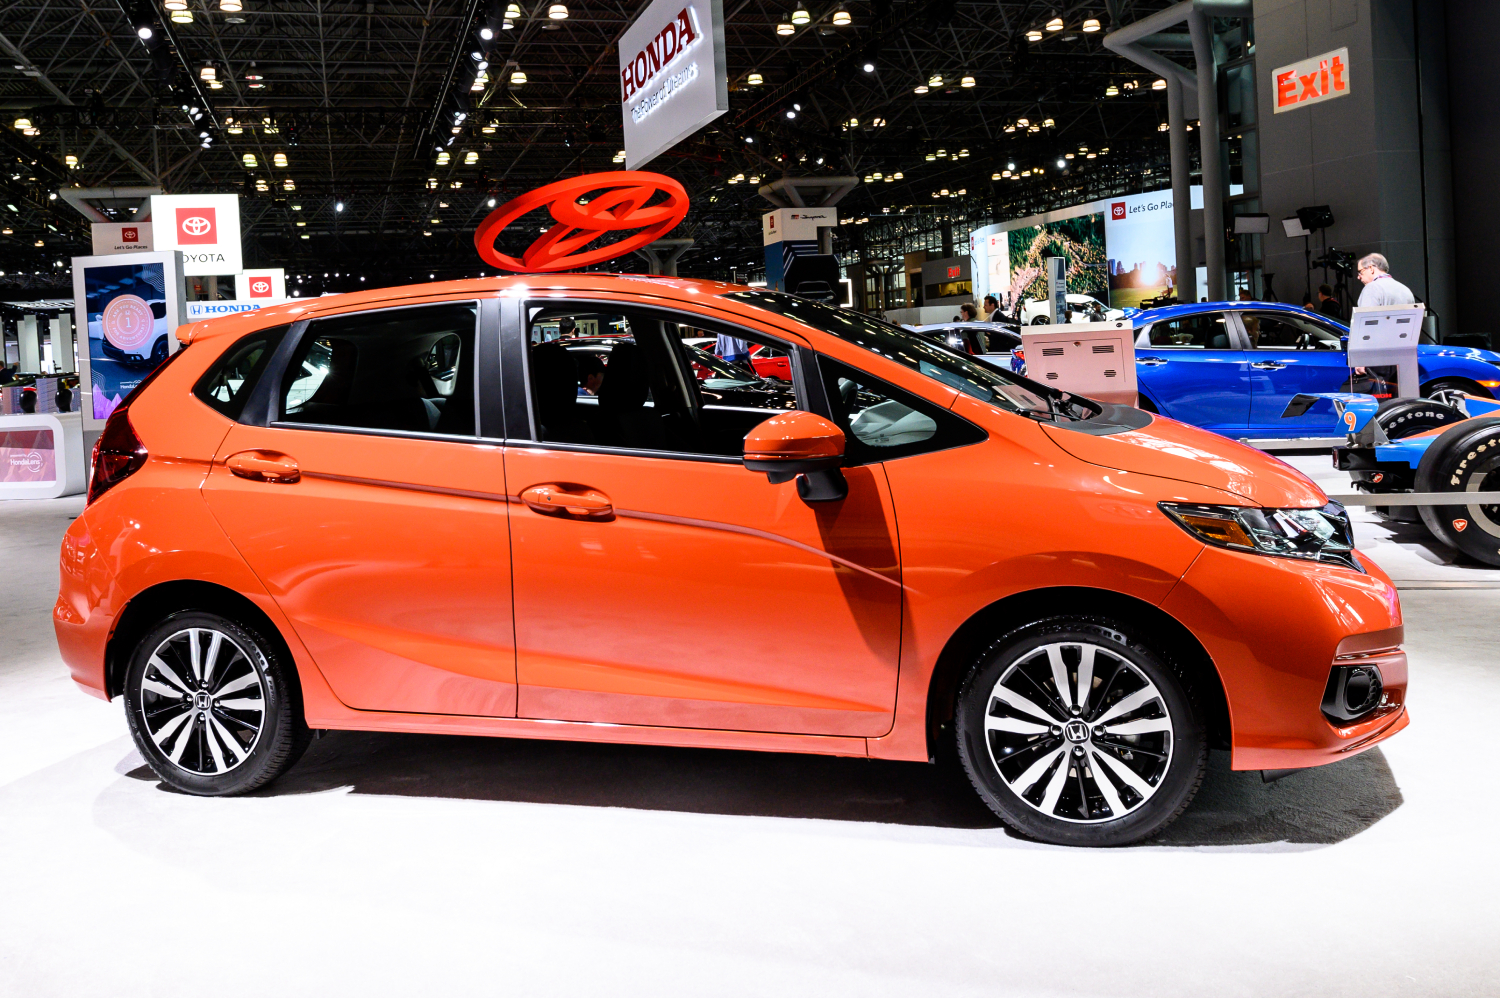 An orange 2016 Honda Fit sits on display